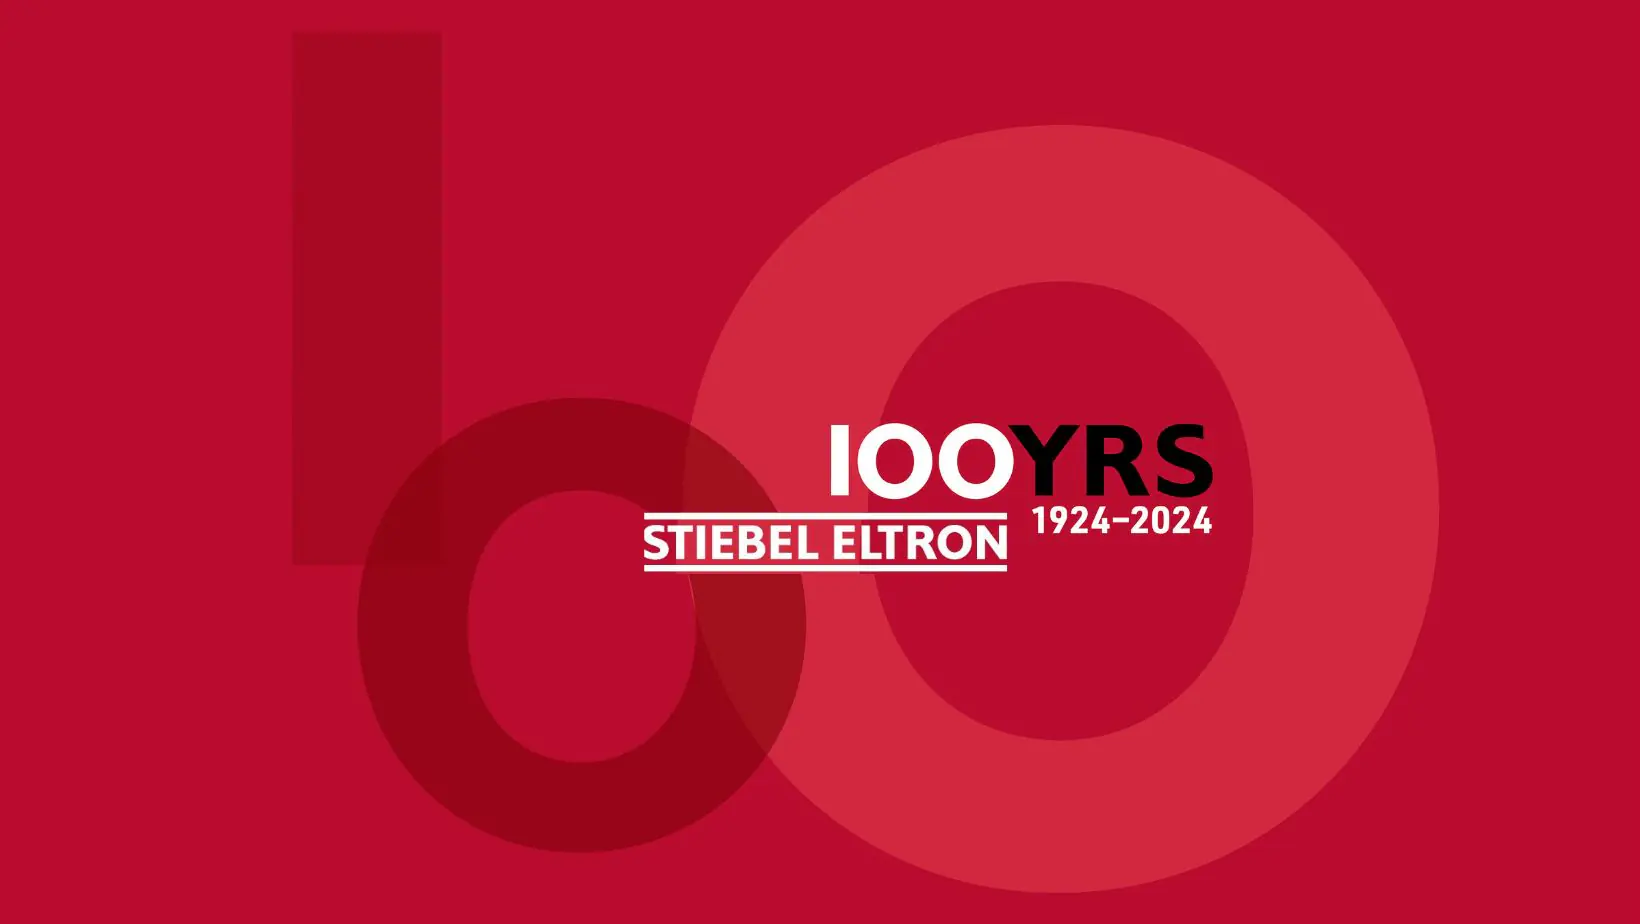 100 Years of Stiebel Eltron